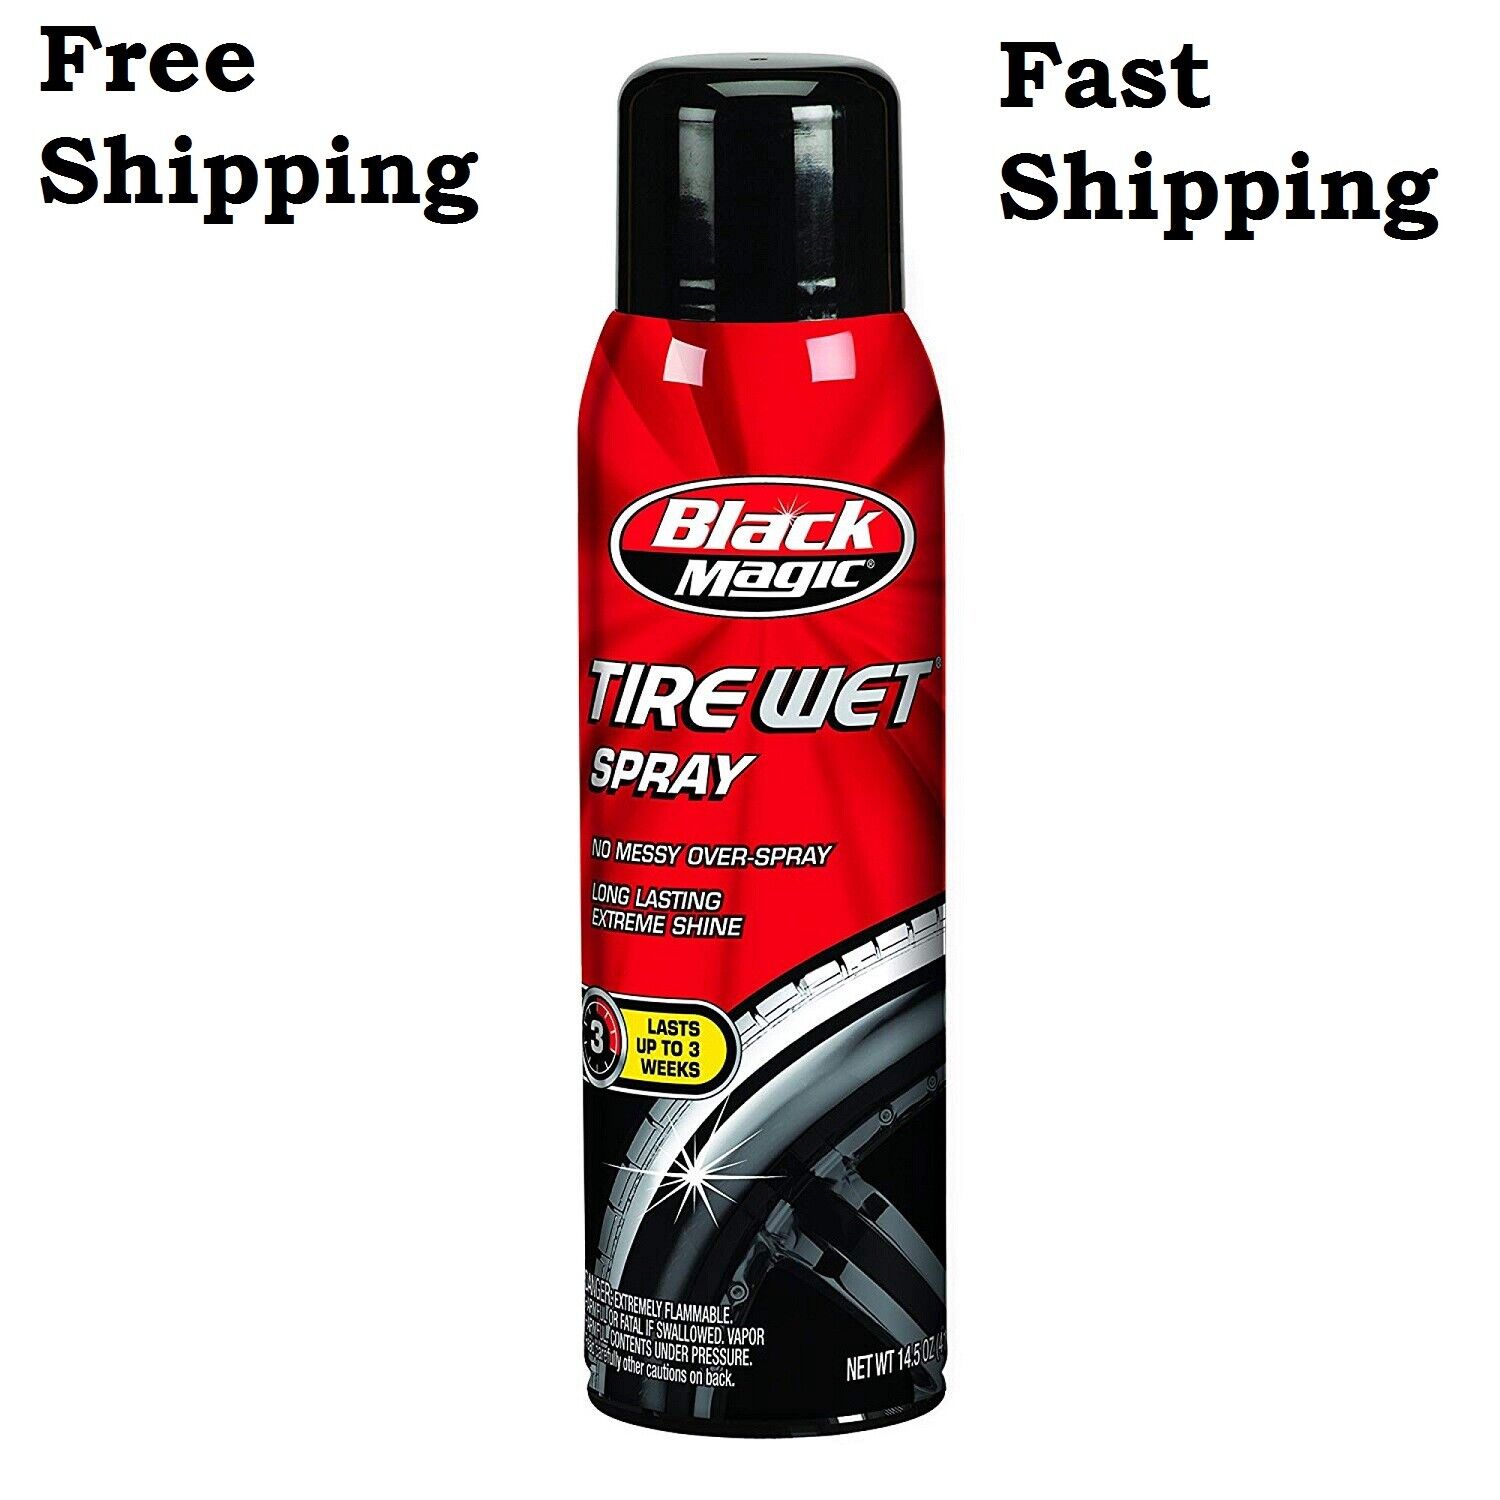 Black Magic Tire Wet Spray 14.5oz. Tire Shine ( Free Shipping )